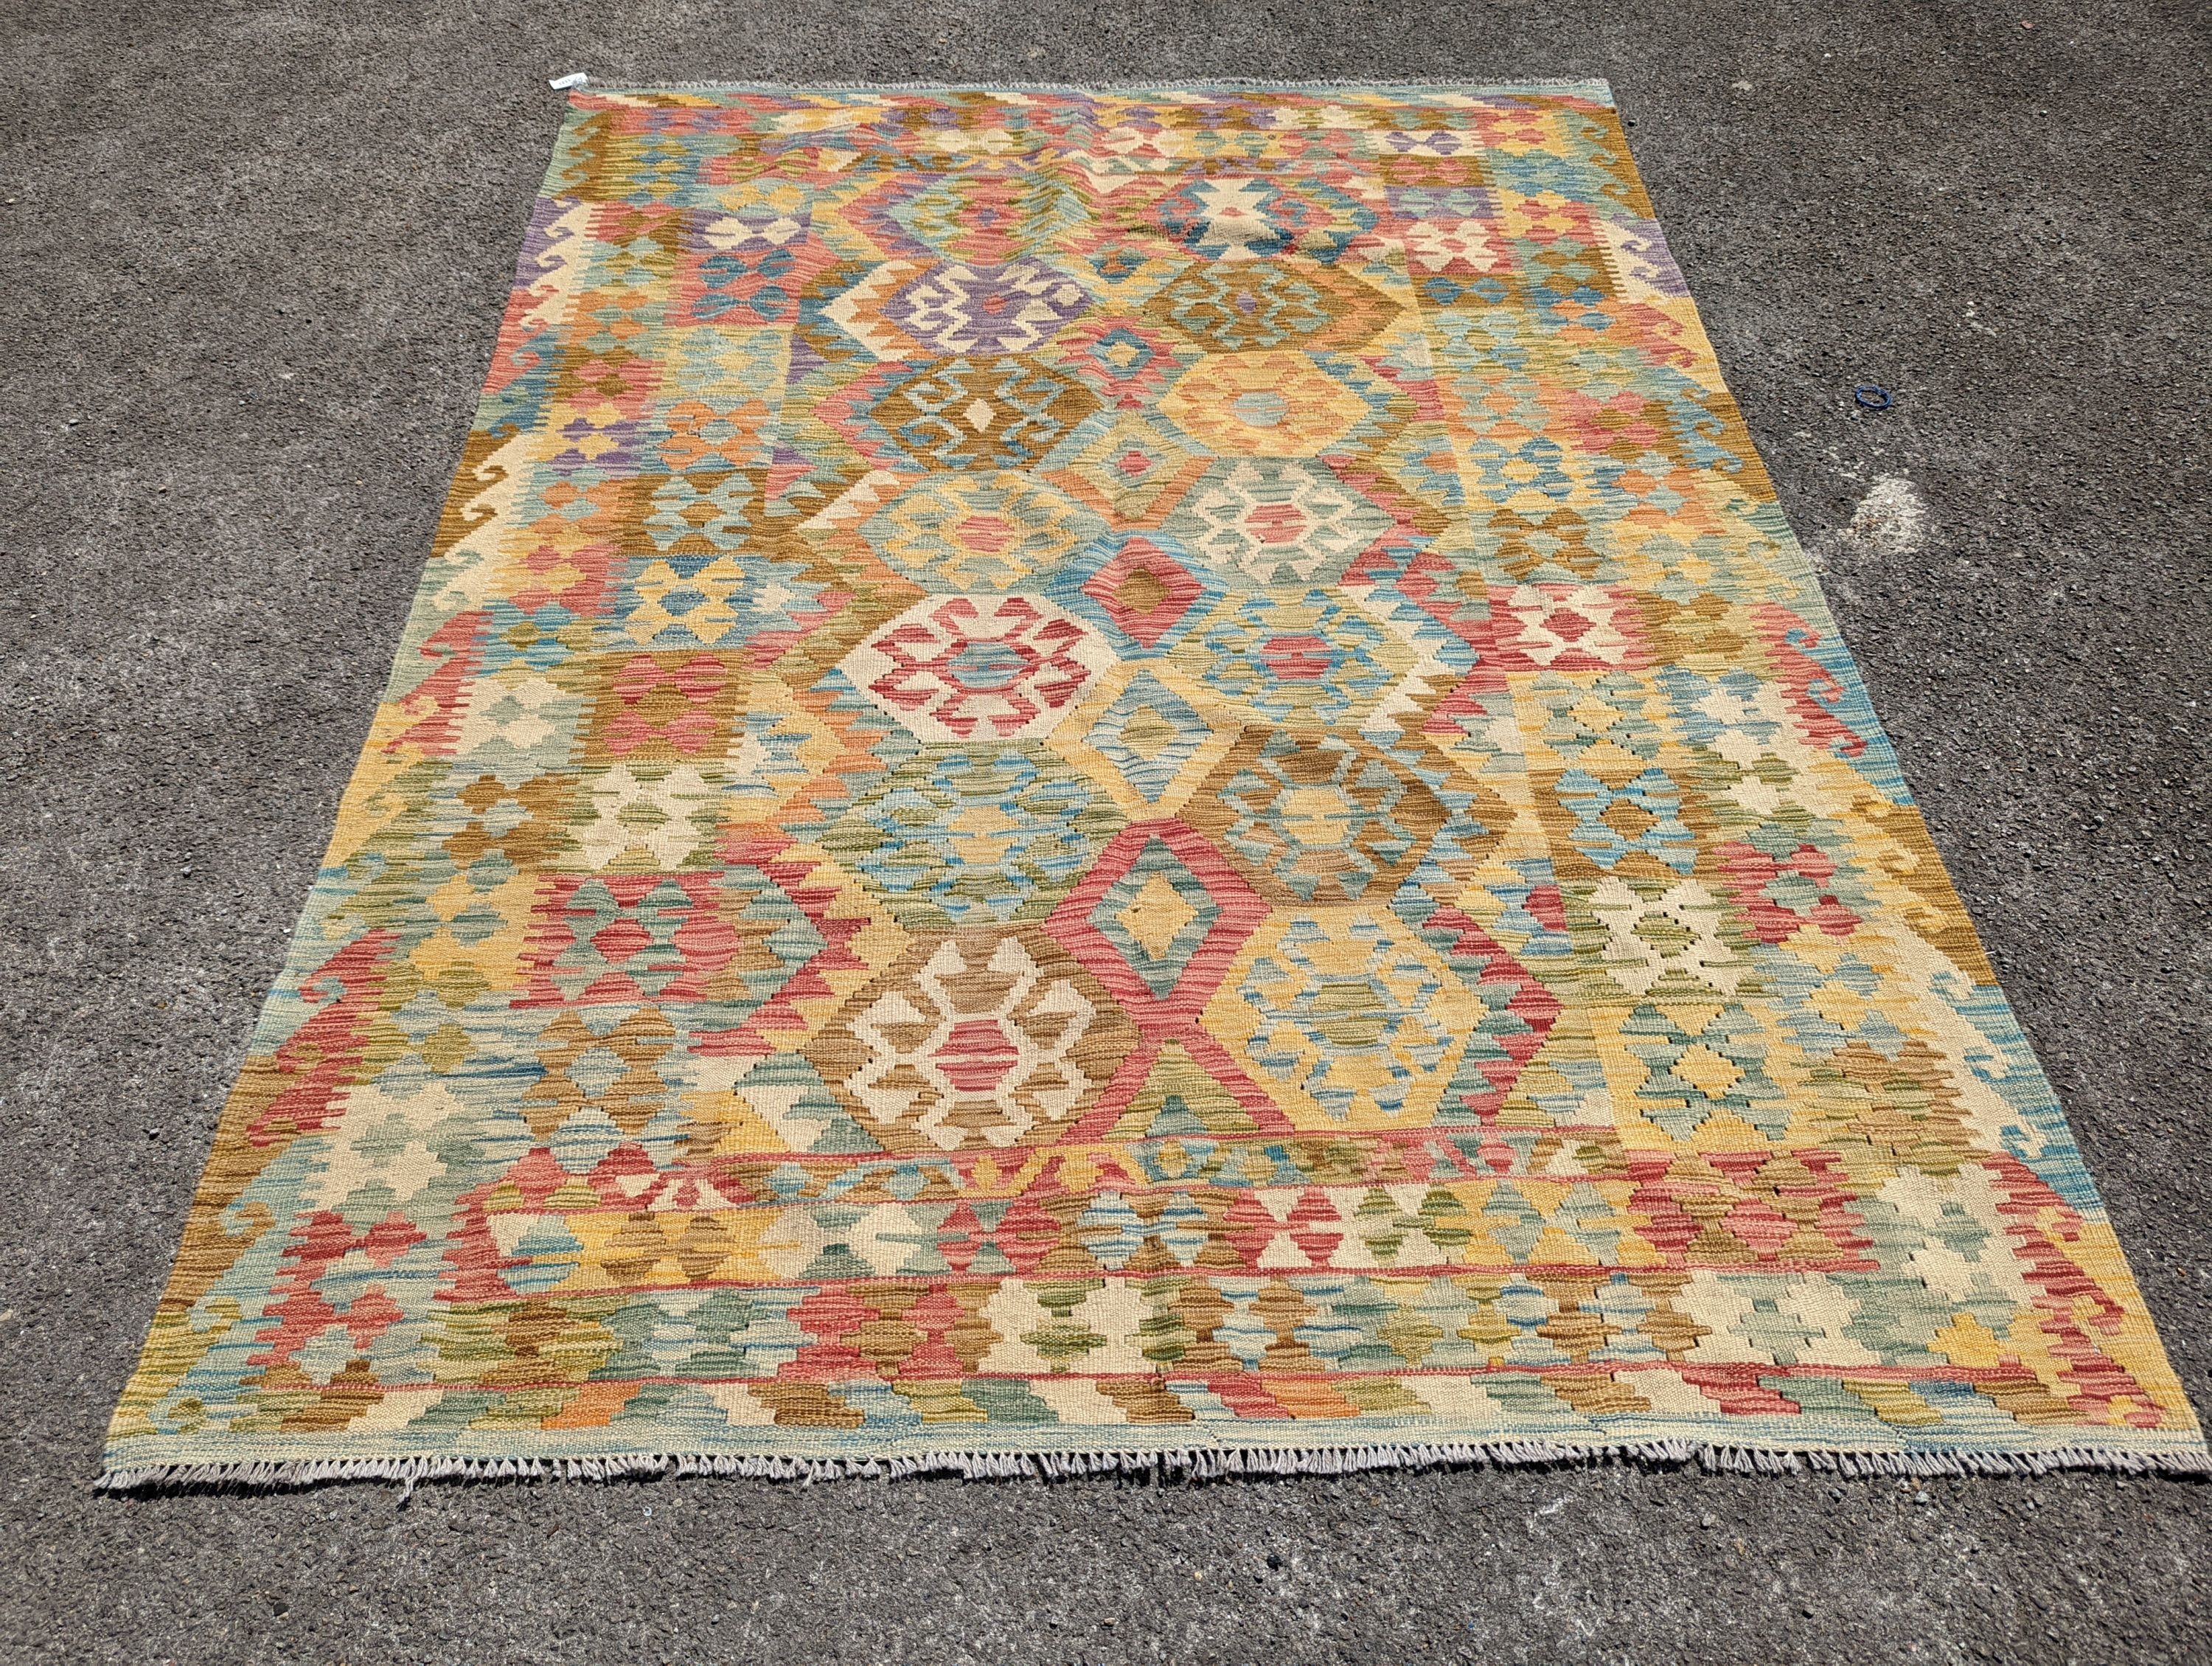 An Anatolian design polychrome geometric flatweave Kilim carpet 270 x 200cm